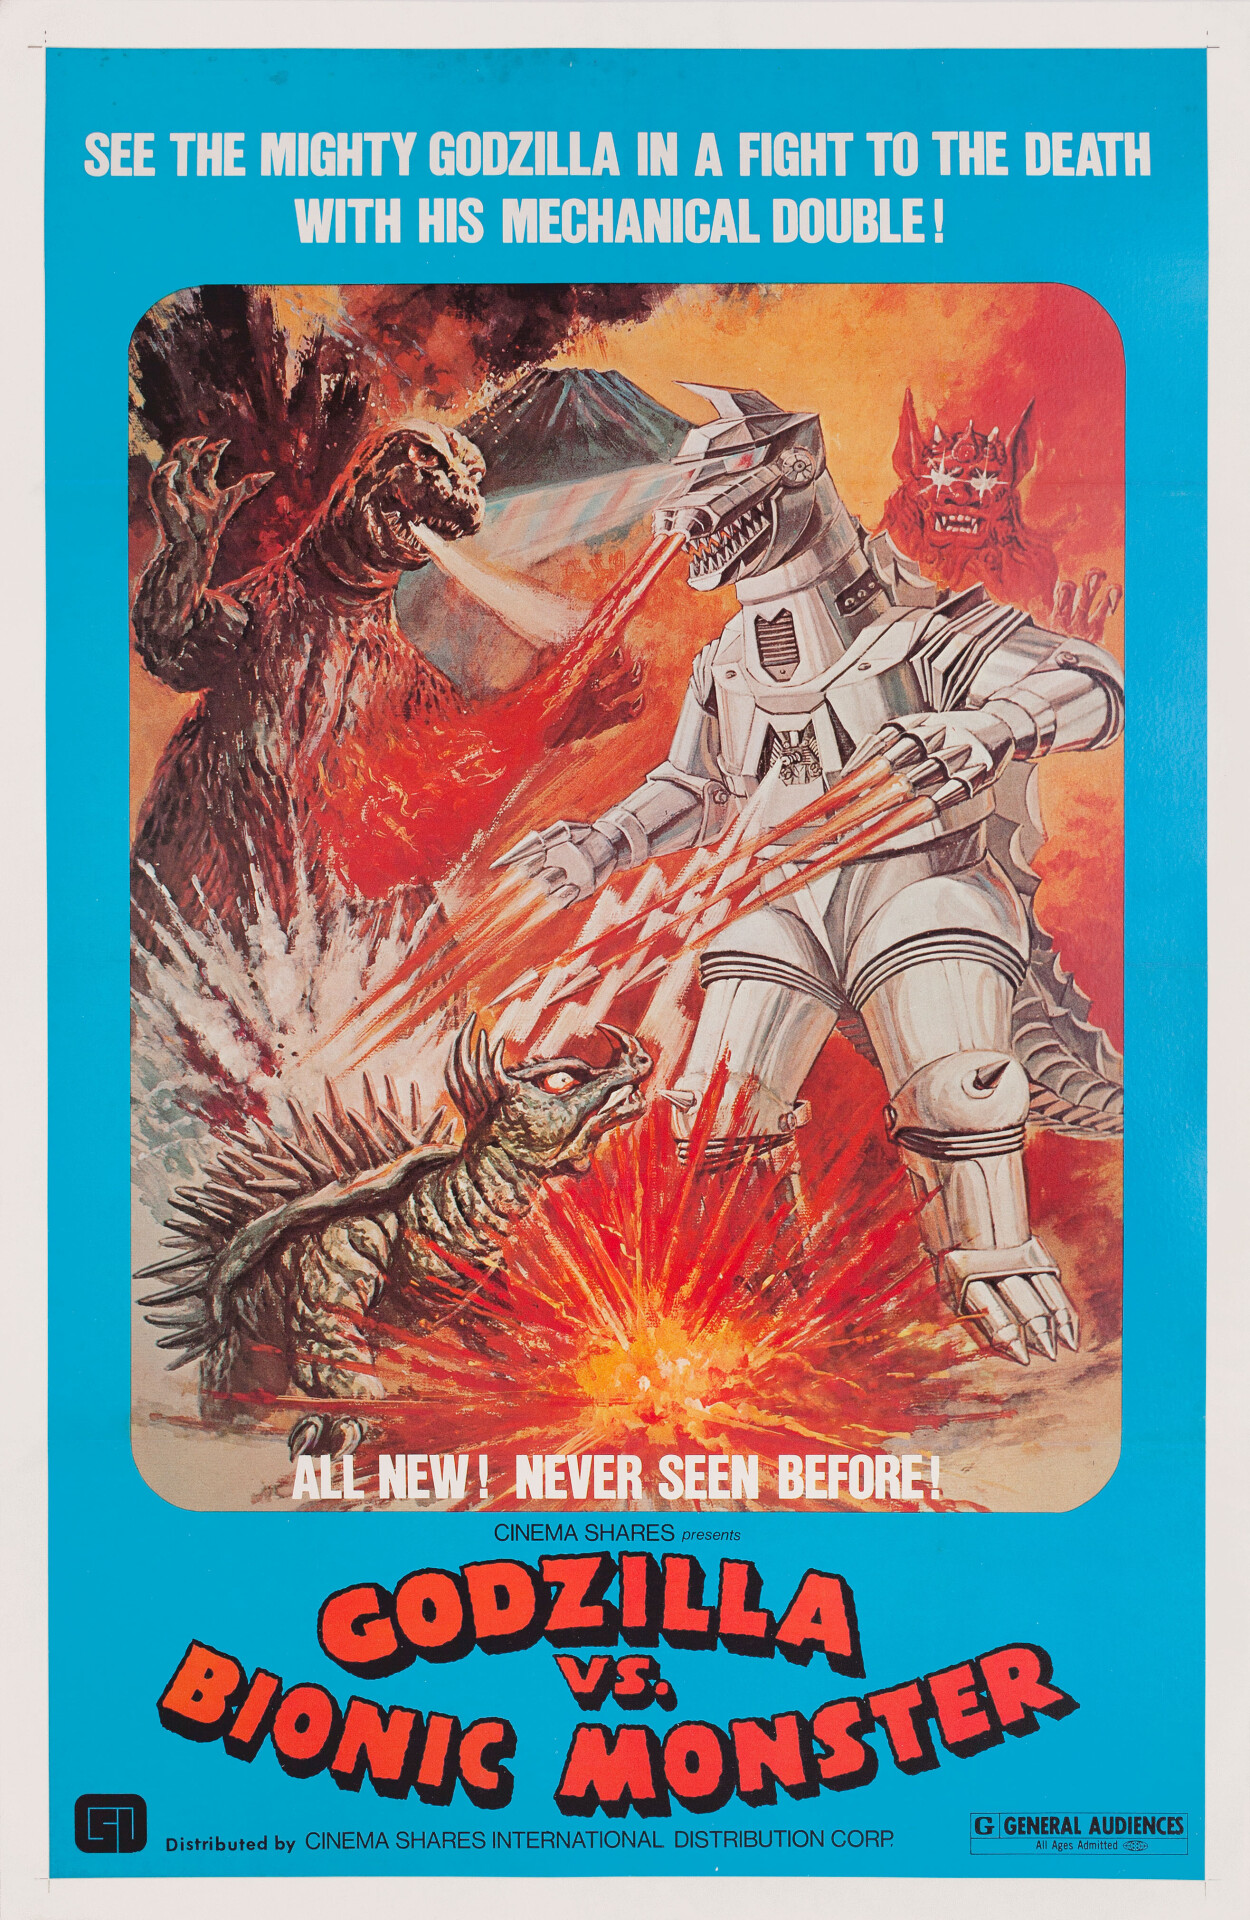 Годзилла против Мехагодзиллы (Godzilla vs. Mechagodzilla, 1974), режиссёр Джун Фукуда, американский постер к фильму (монстры, 1974 год)